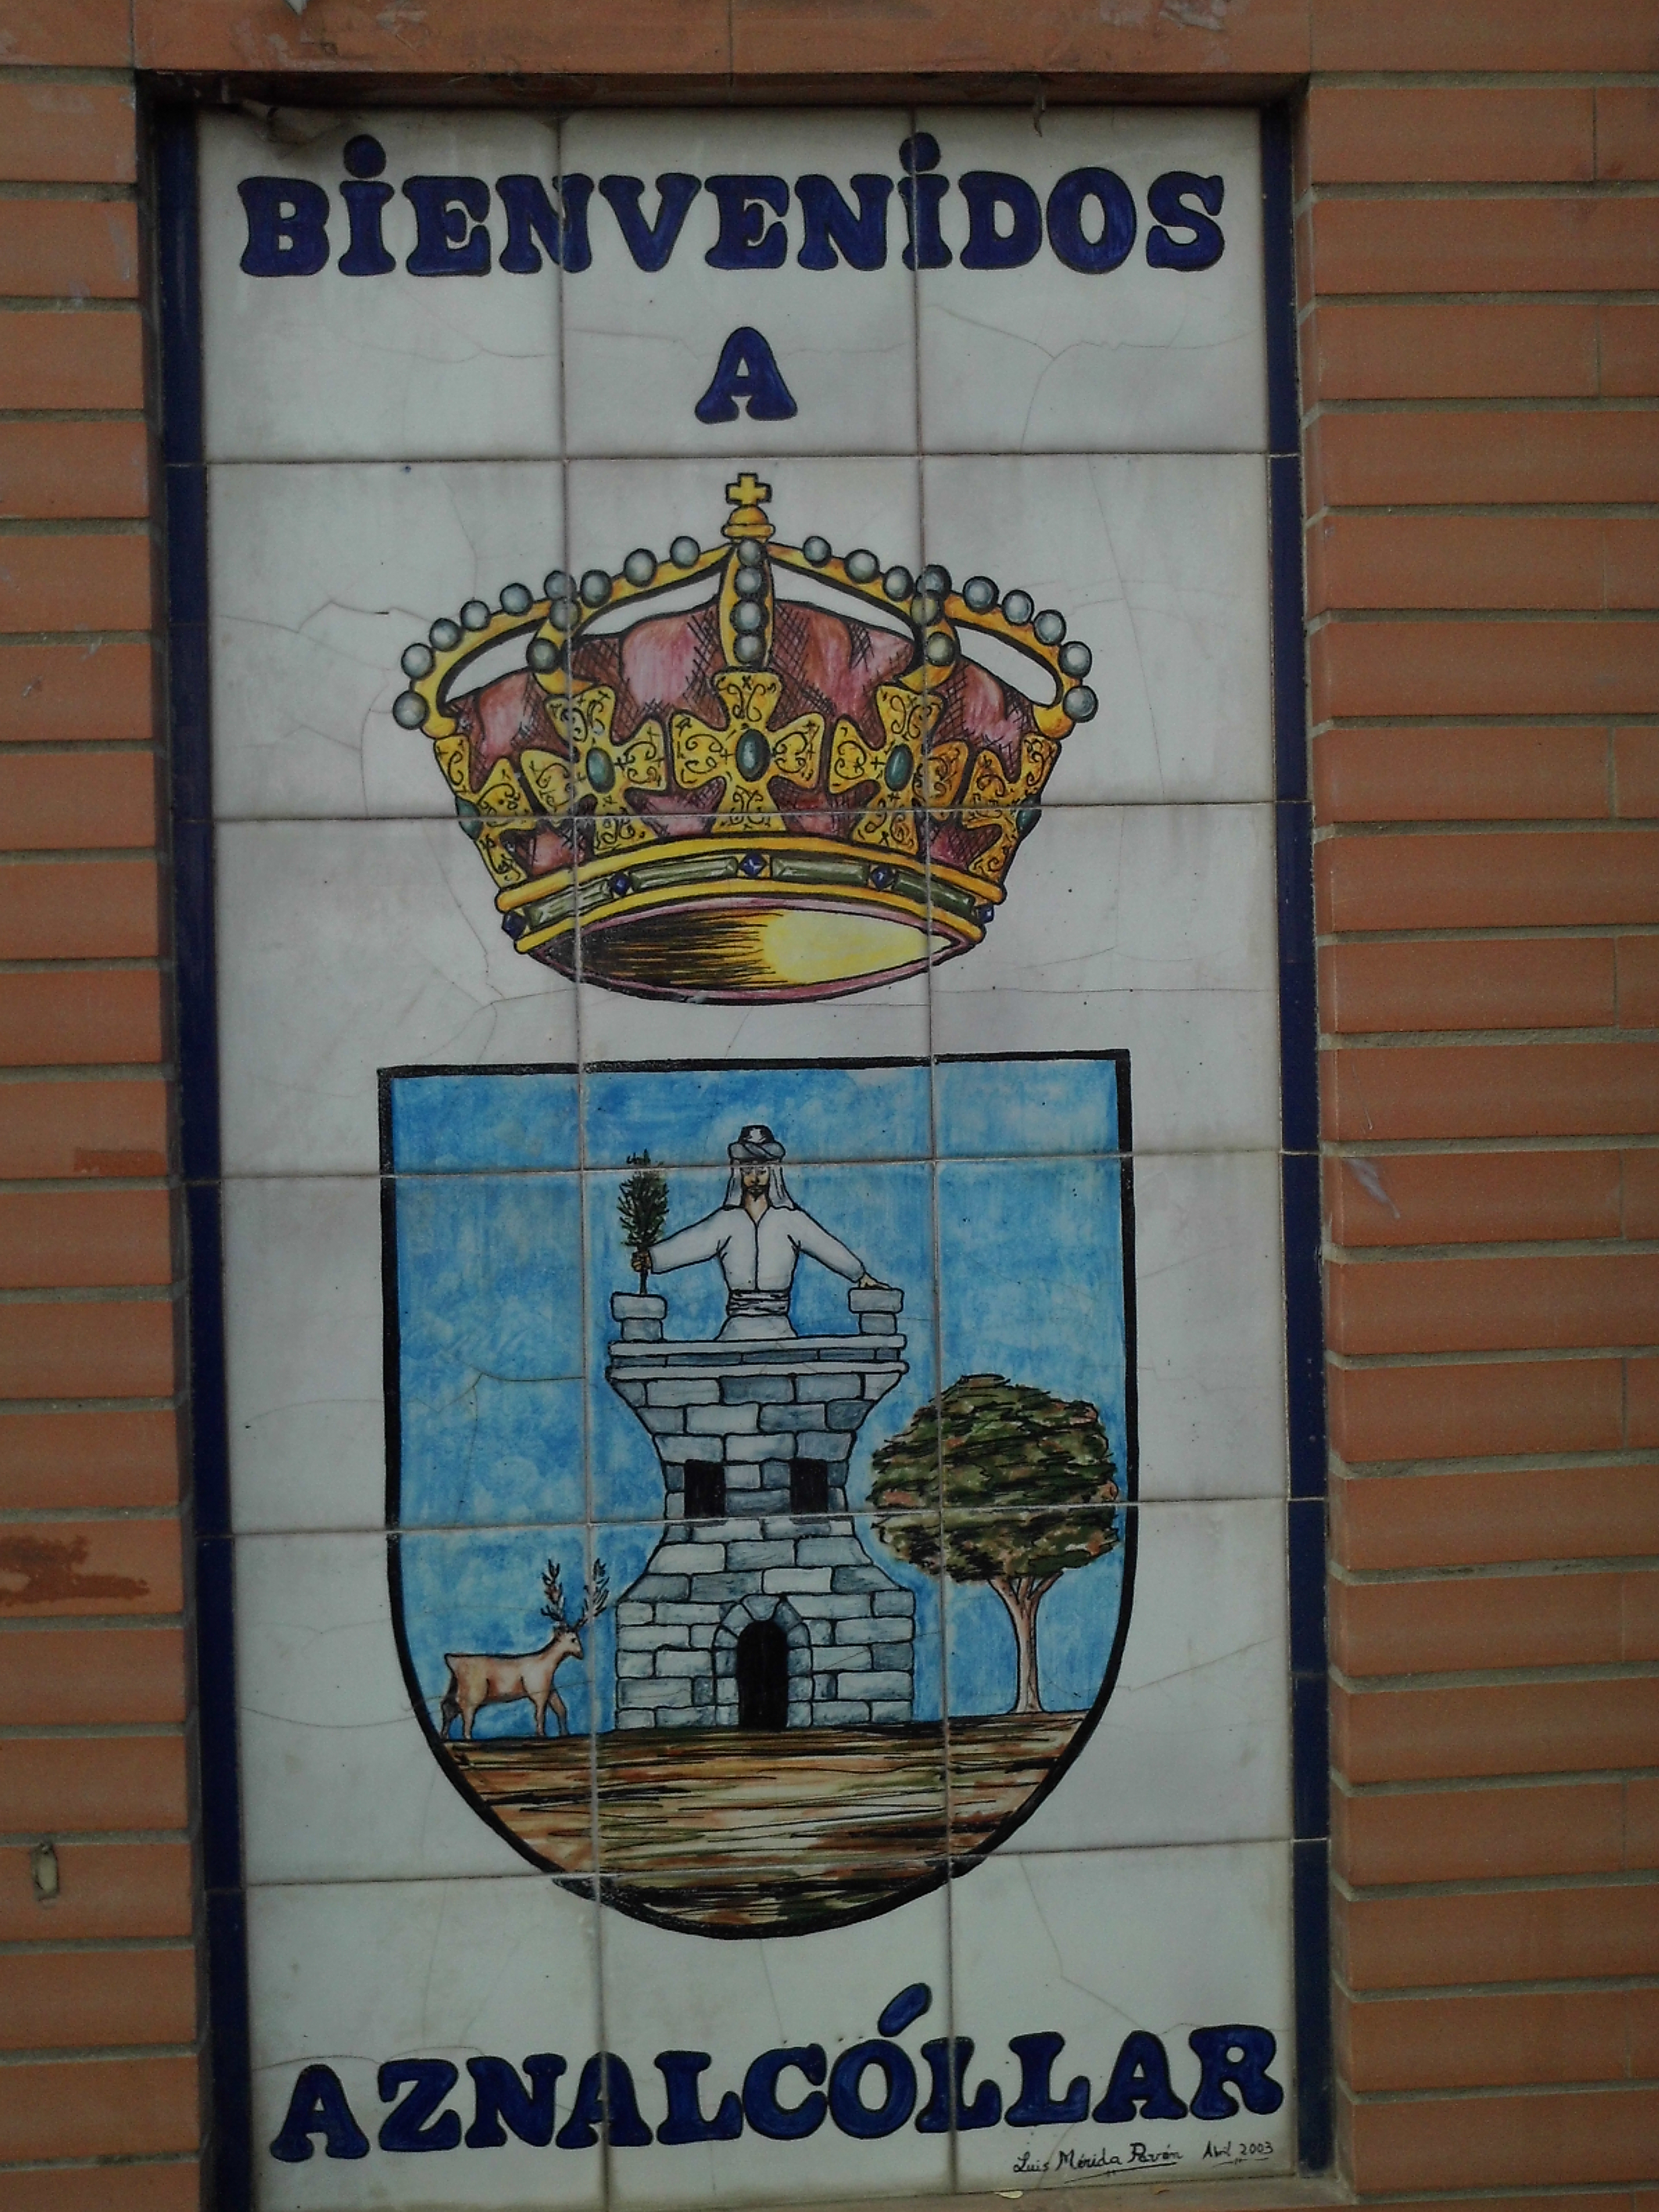 File:Panel de azulejos, Cerámica Santa Ana (Sevilla).jpg - Wikimedia Commons